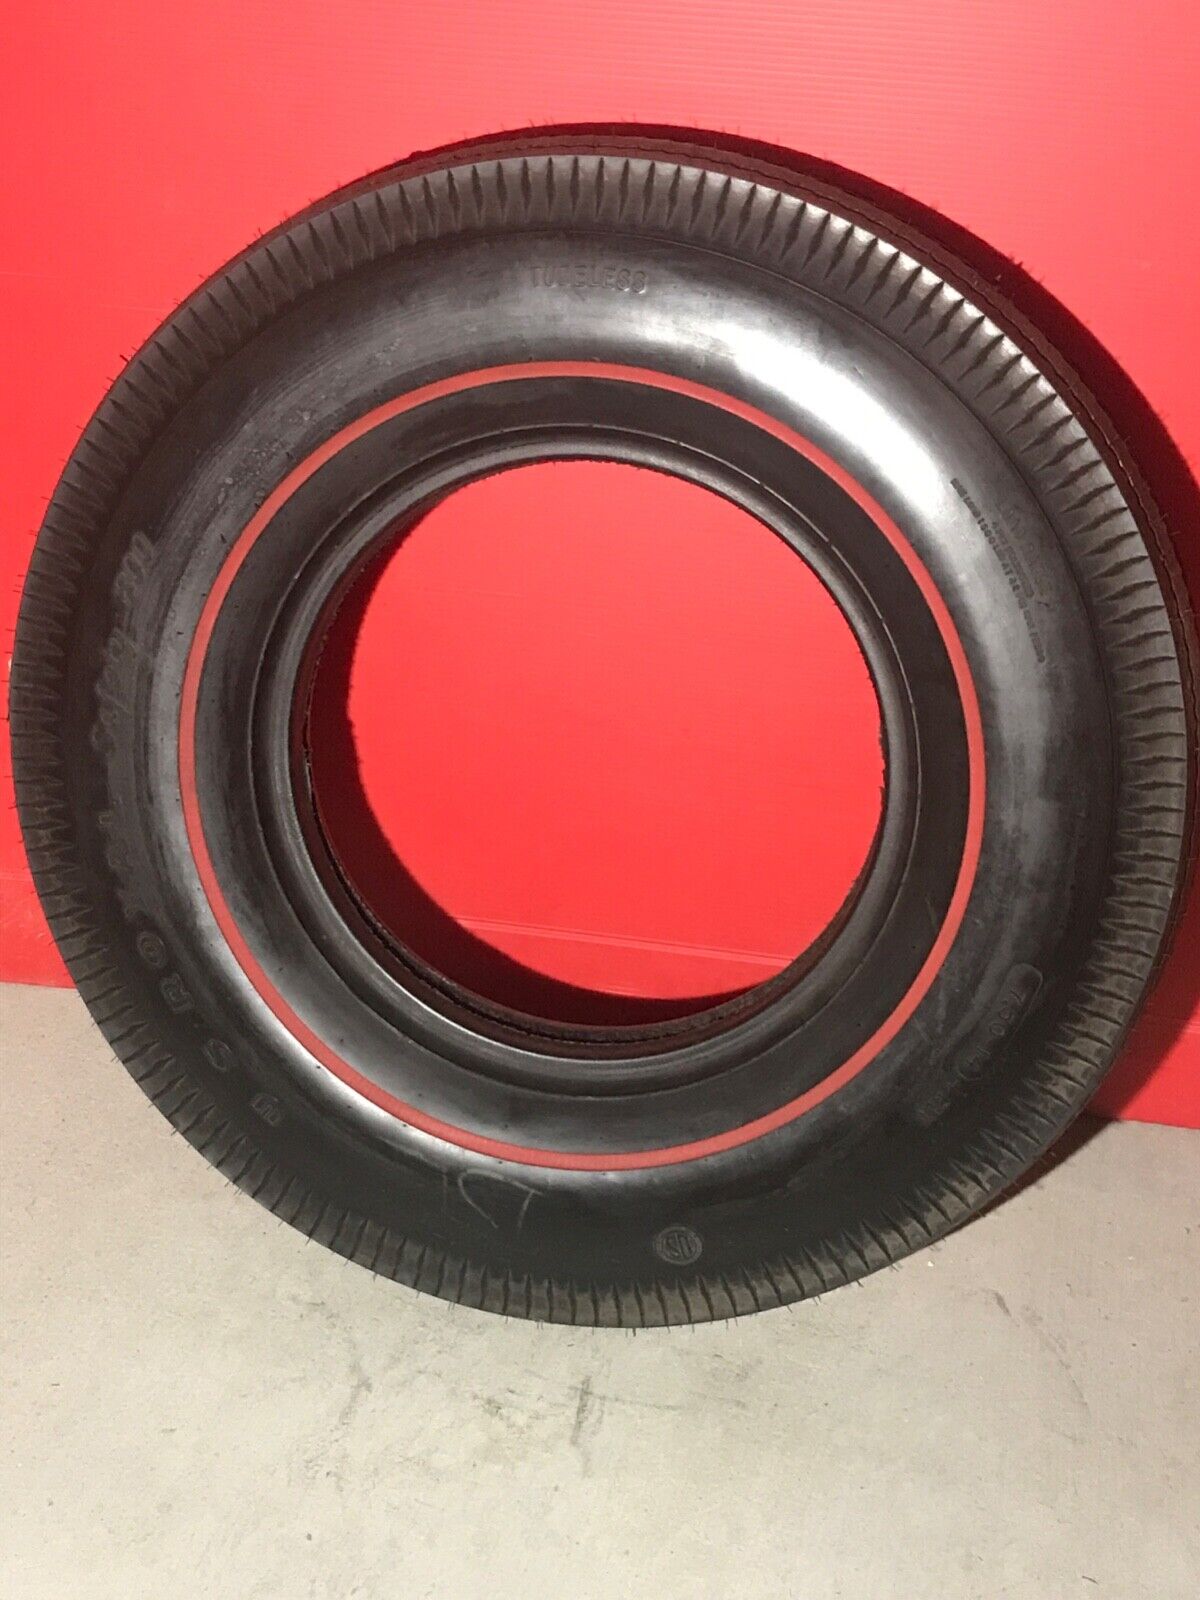 Vintage US Royal Safety 800 RED LINE 7.50-14 Bias Ply Tire  NOS *Blemished*